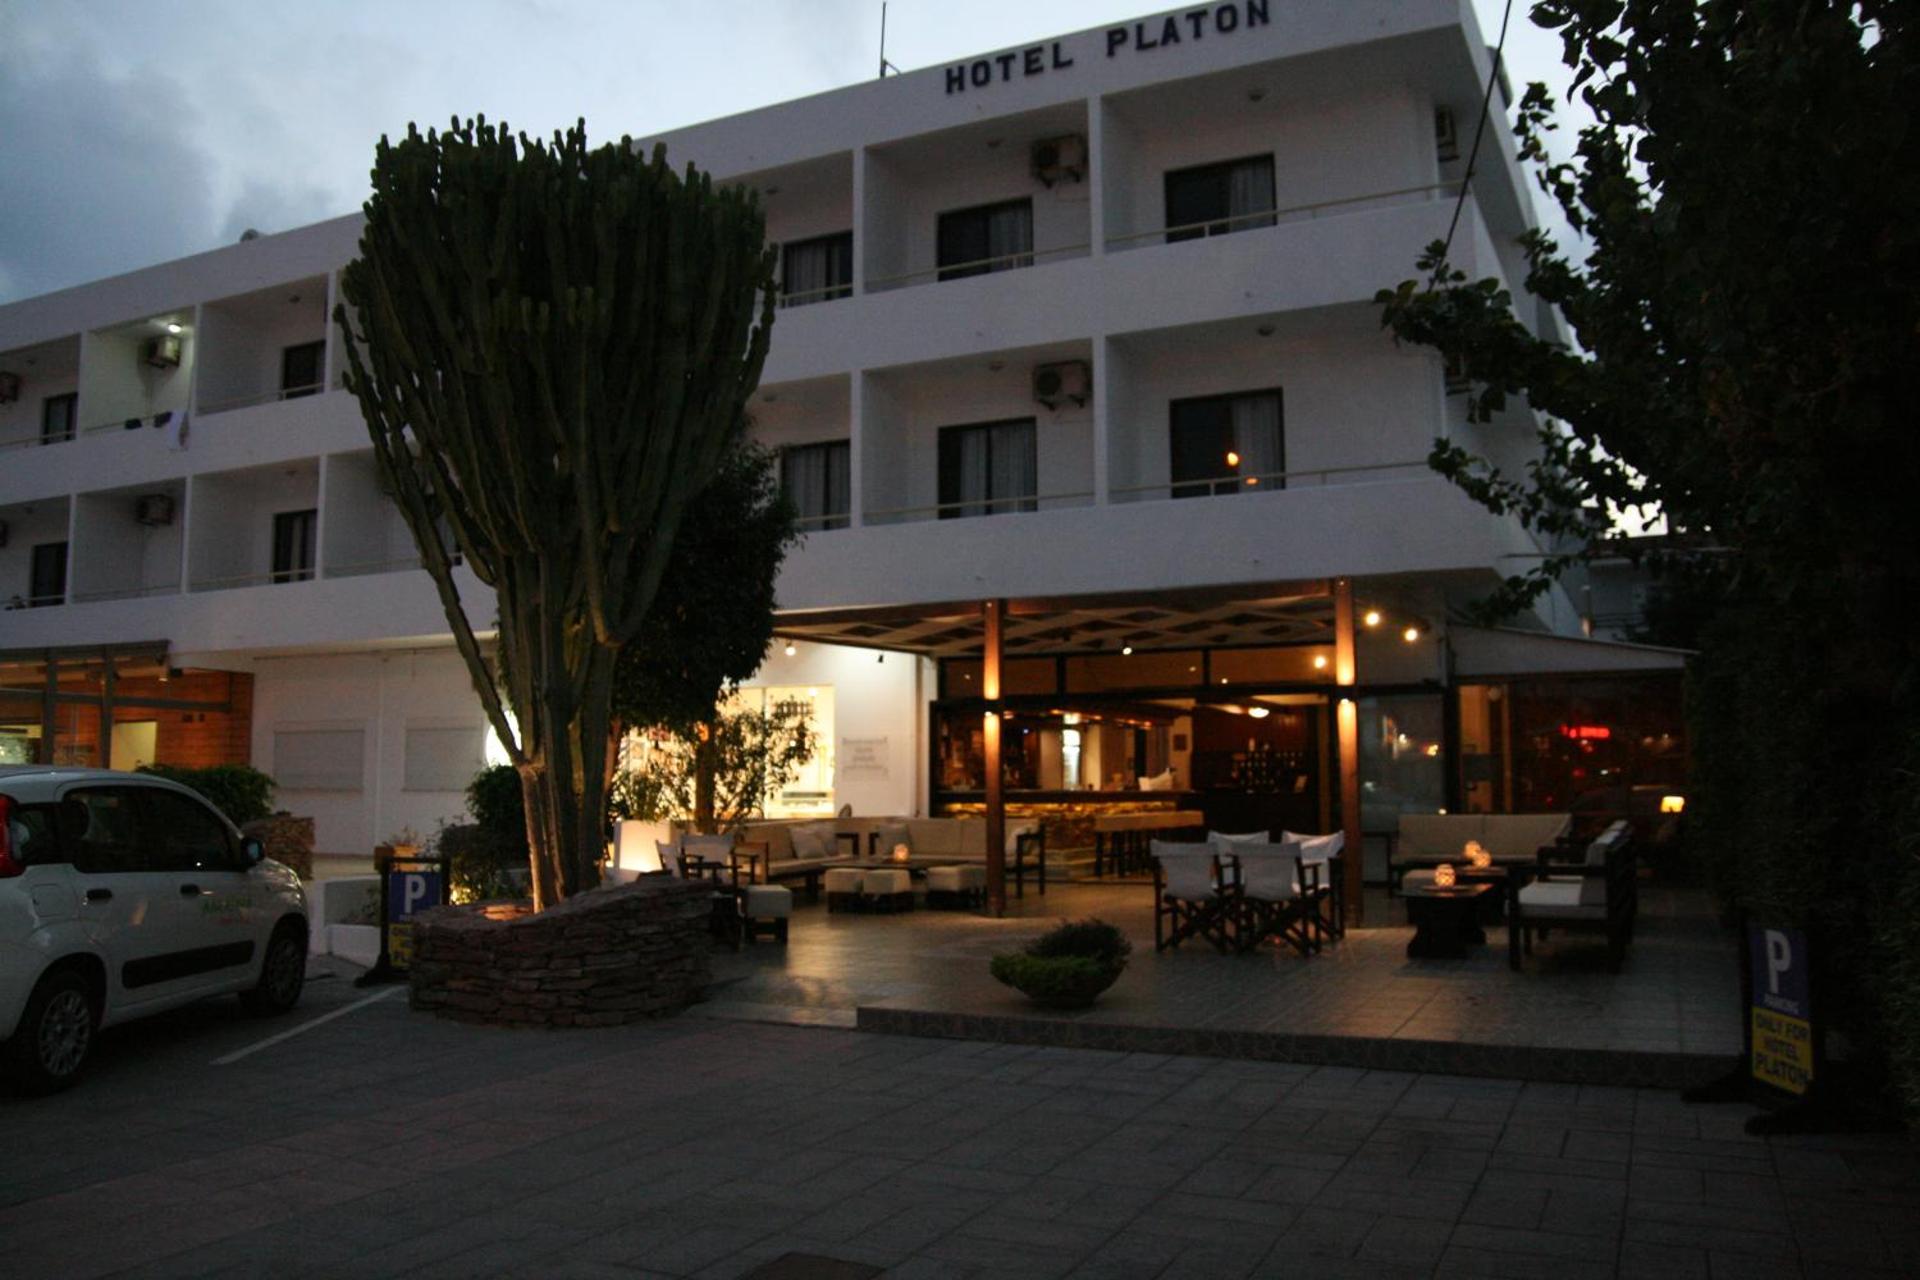 PLATON HOTEL